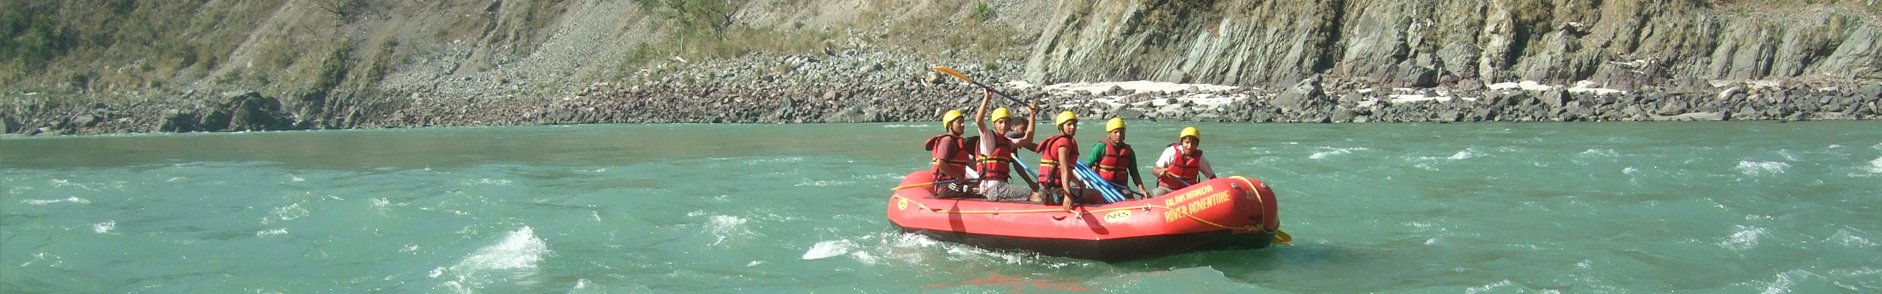 Why Choose Rishikesh for River Rafting